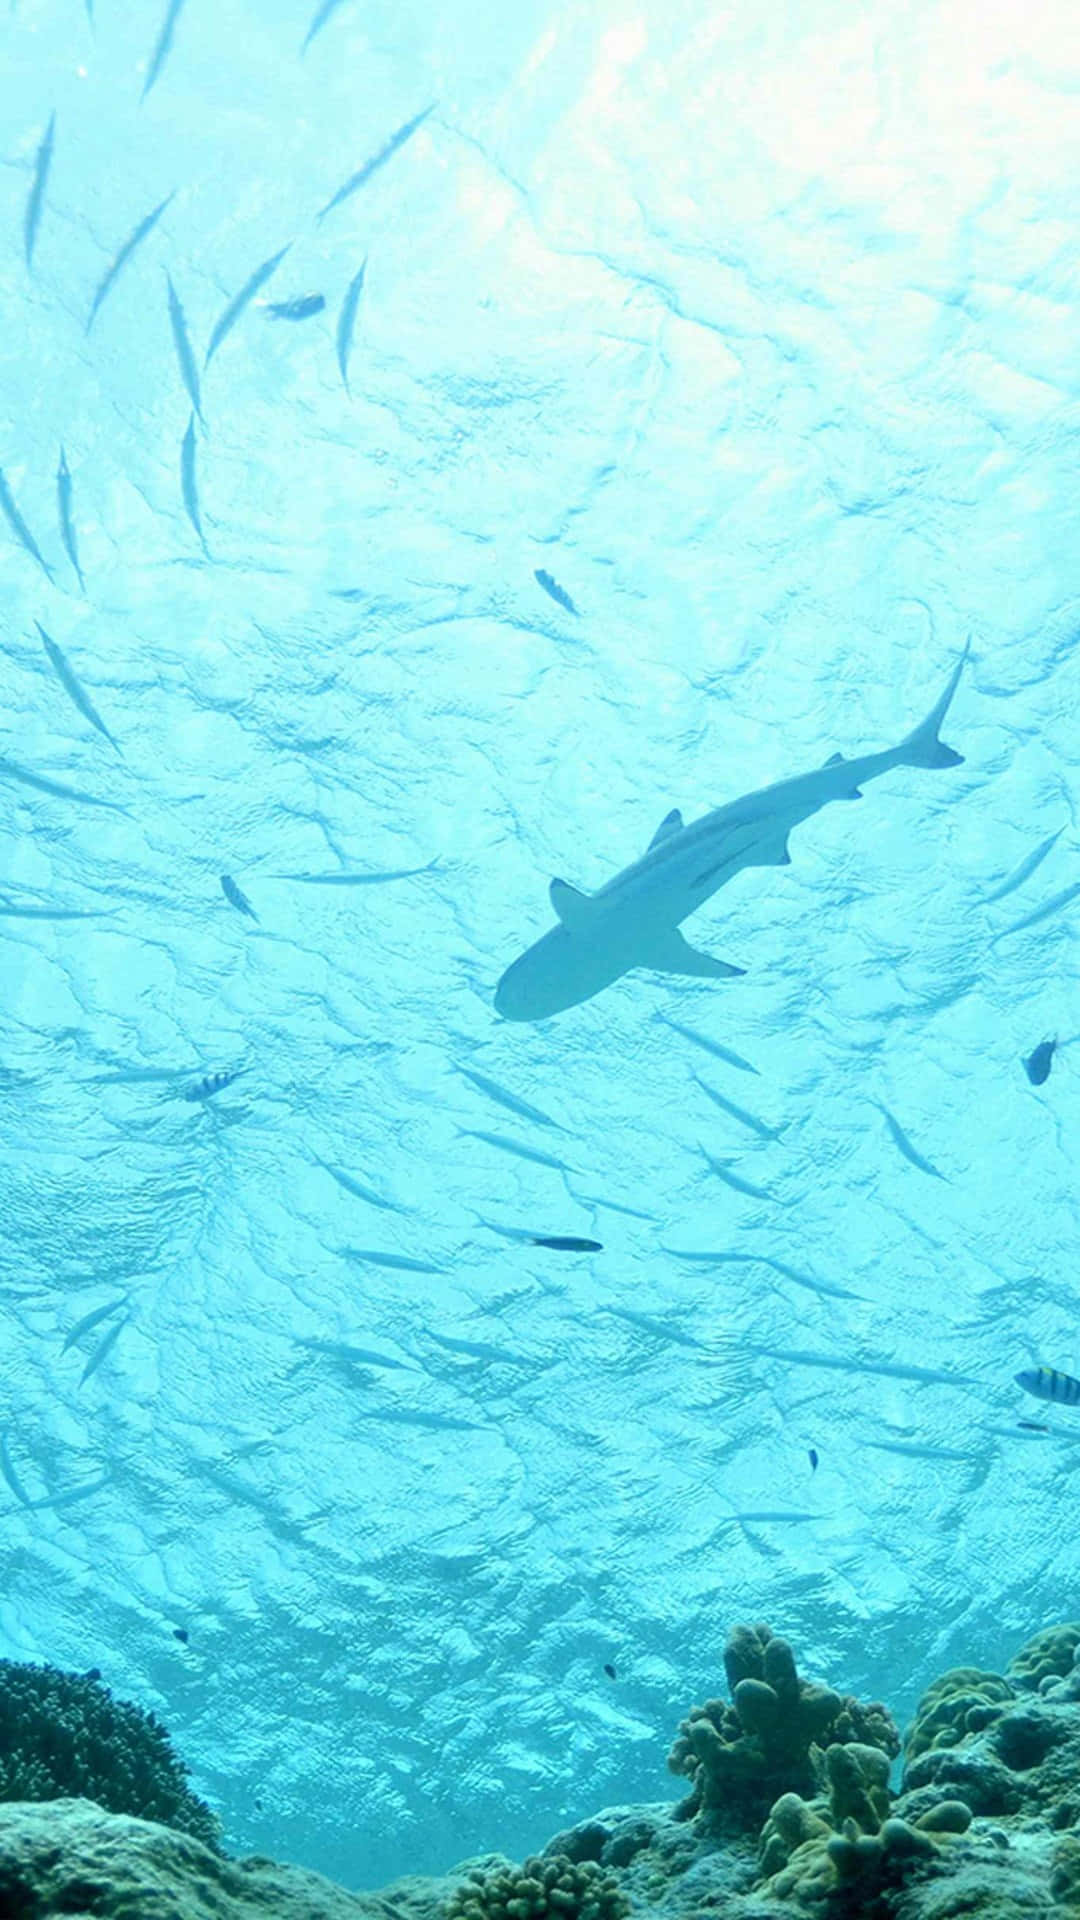 Reef Shark Silhouette Underwater Wallpaper